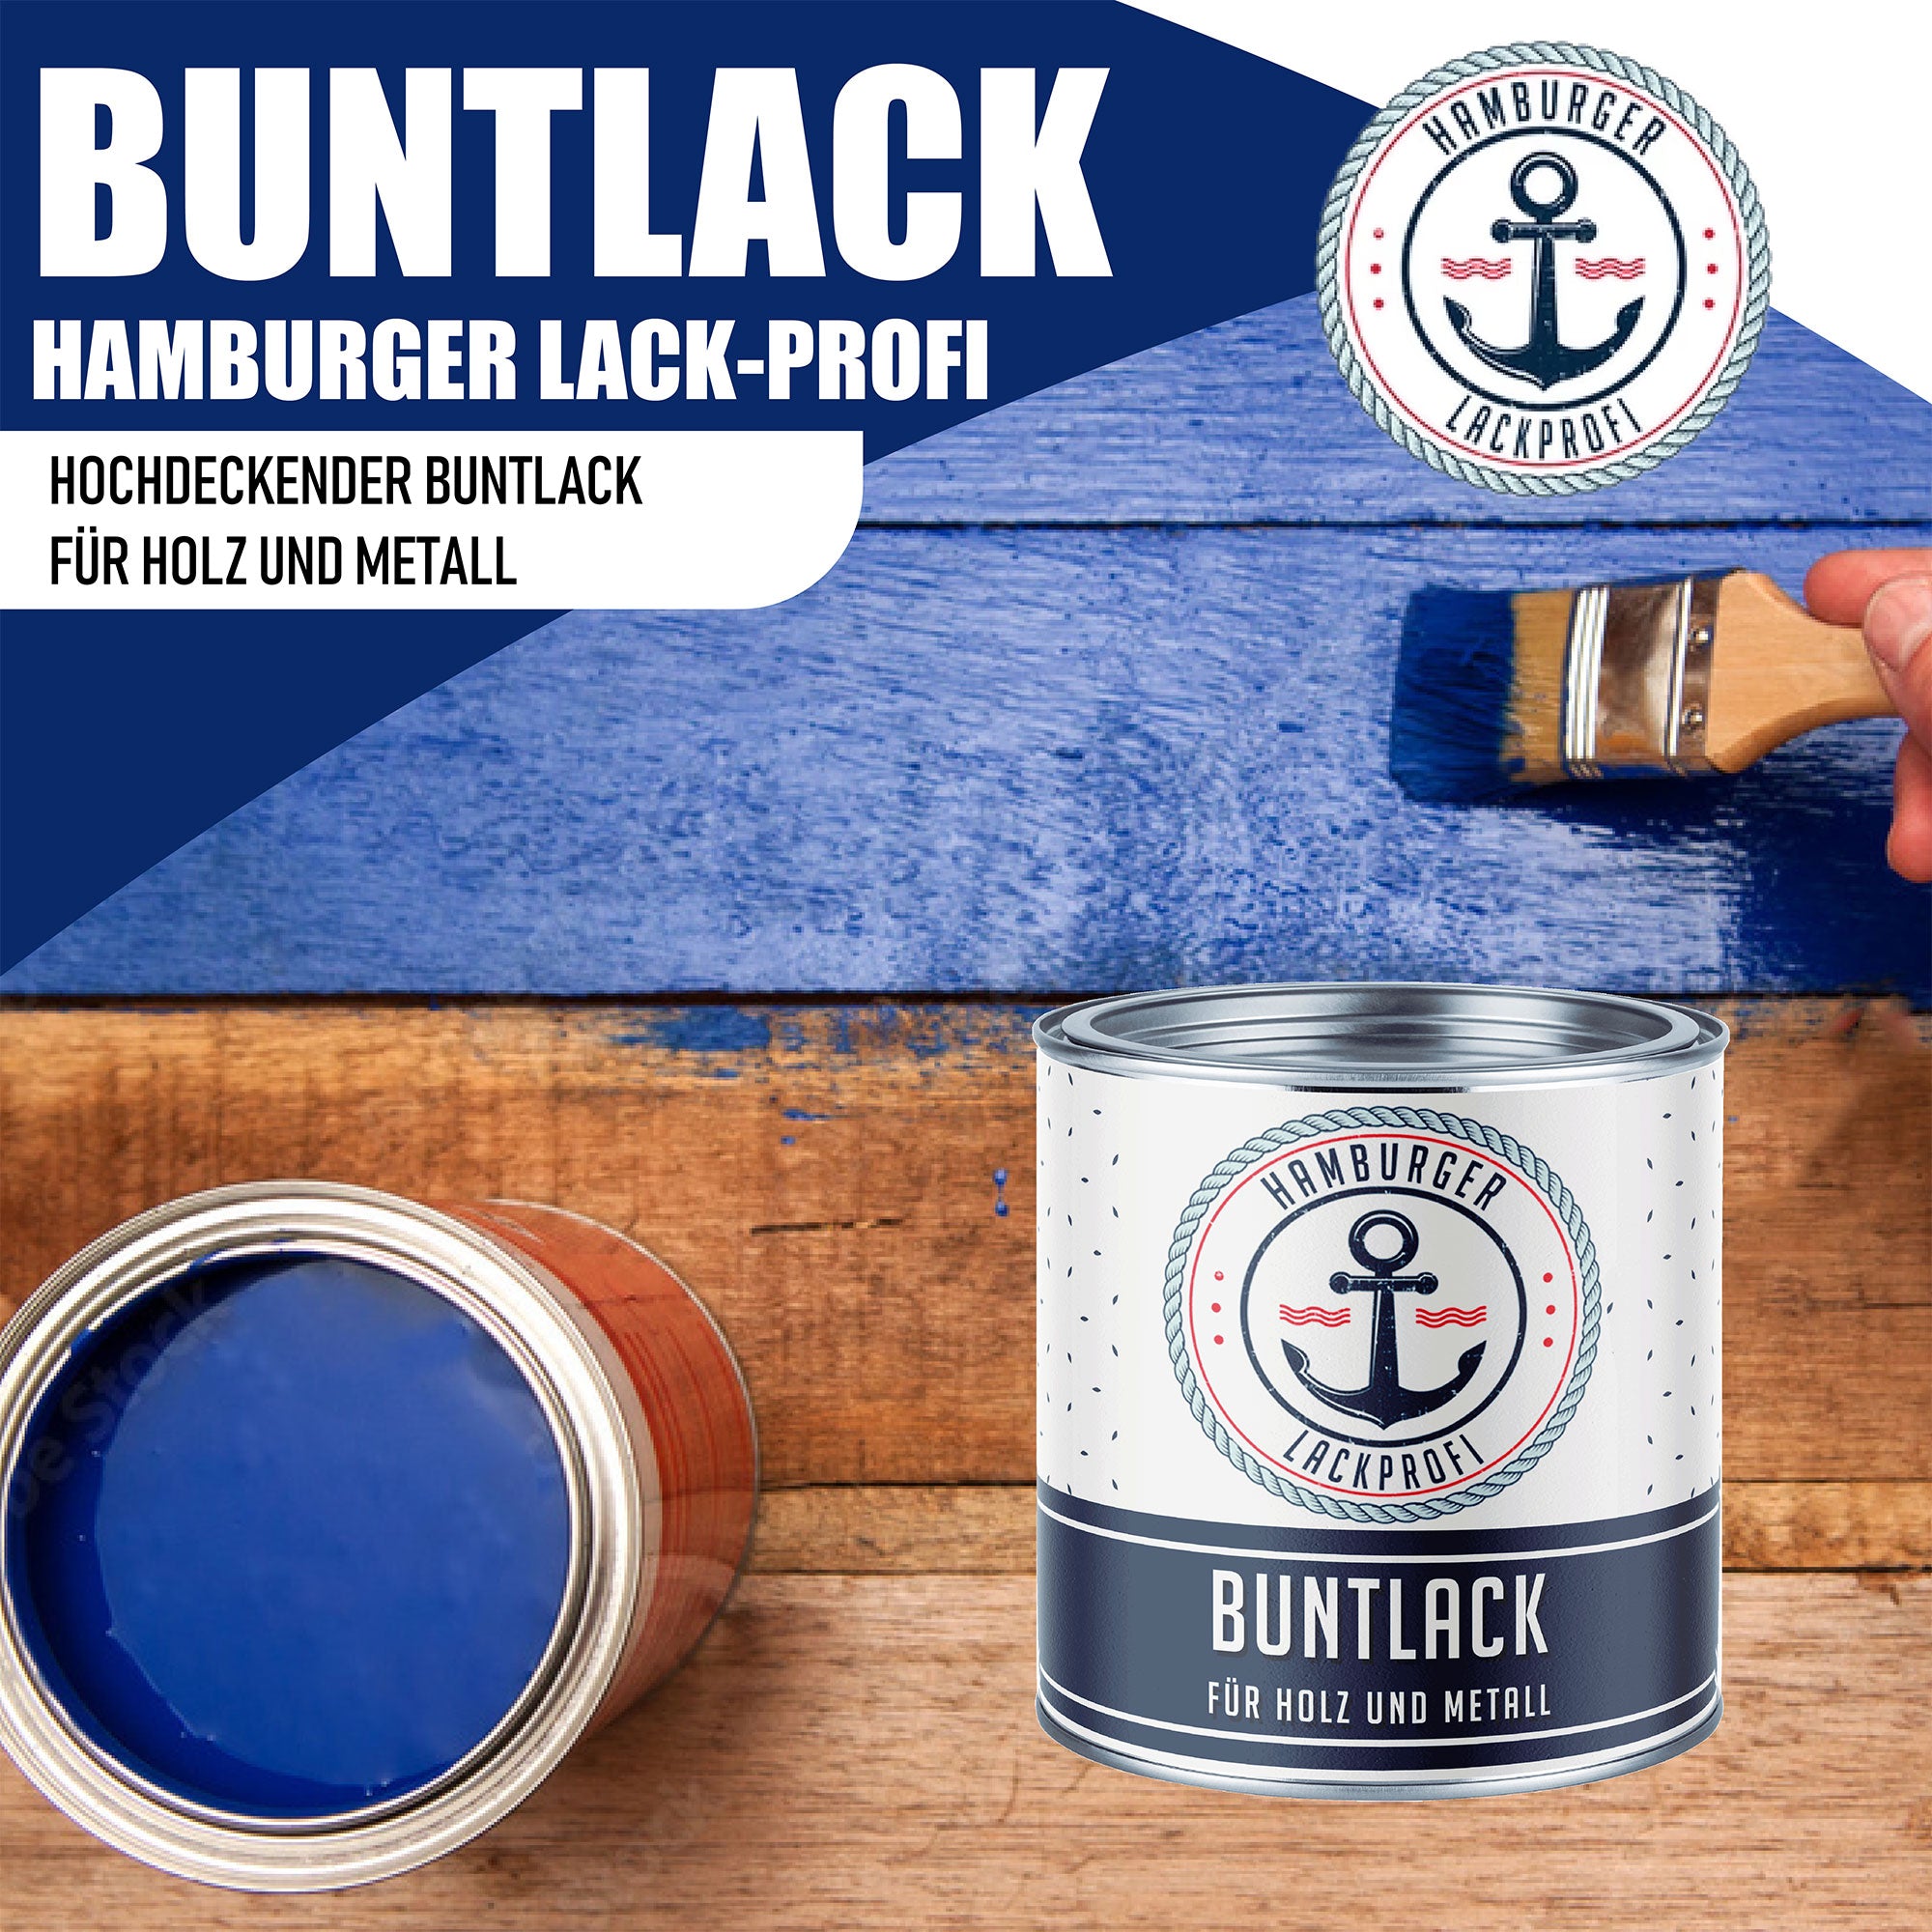 Hamburger Lack-Profi Buntlack in Schwarzbraun RAL 8022 mit Lackierset (X300) & Verdünnung (1 L) - 30% Sparangebot